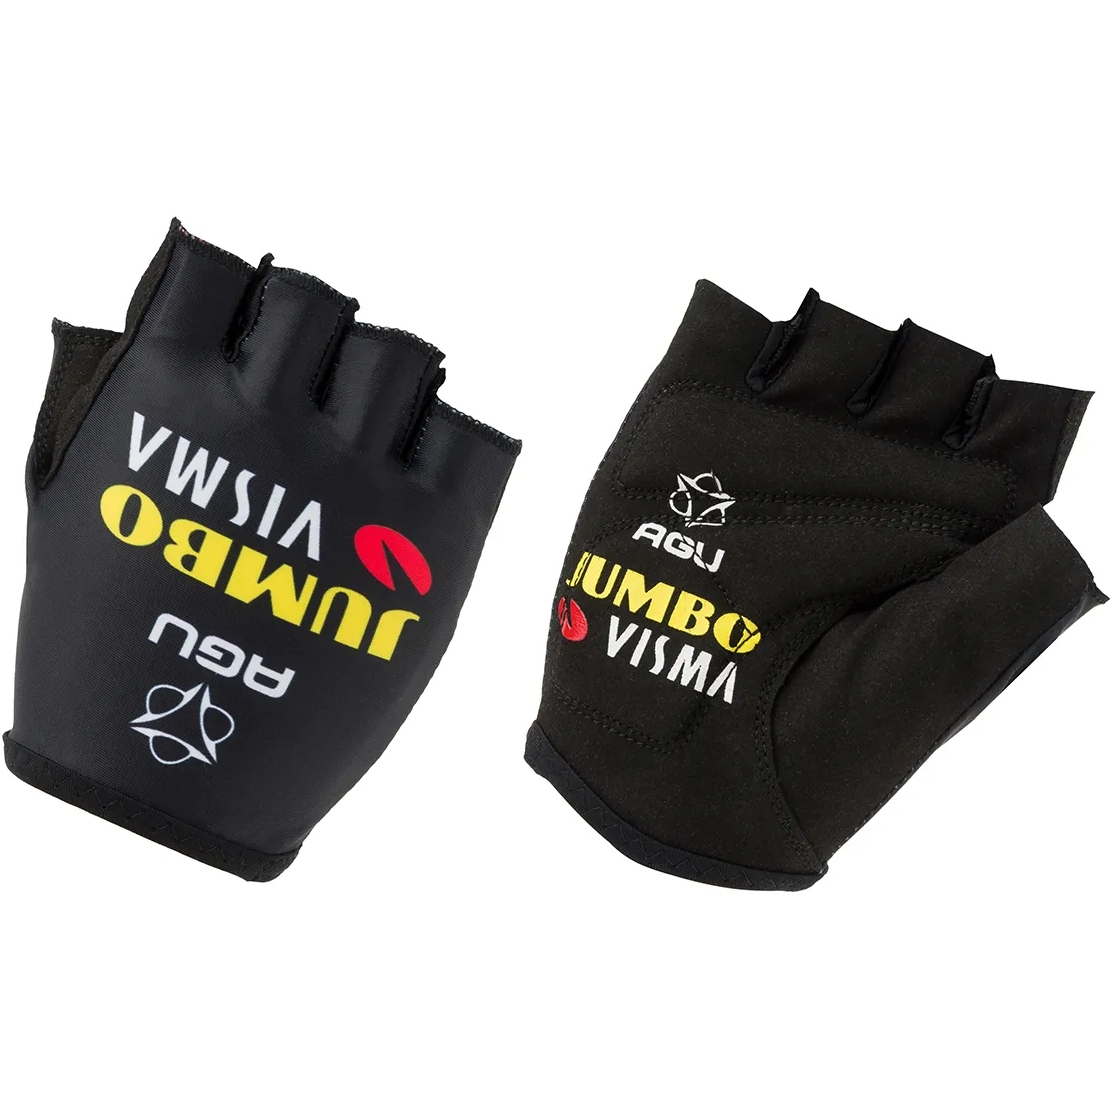 Produktbild von AGU Team Jumbo-Visma Replika Handschuhe - schwarz